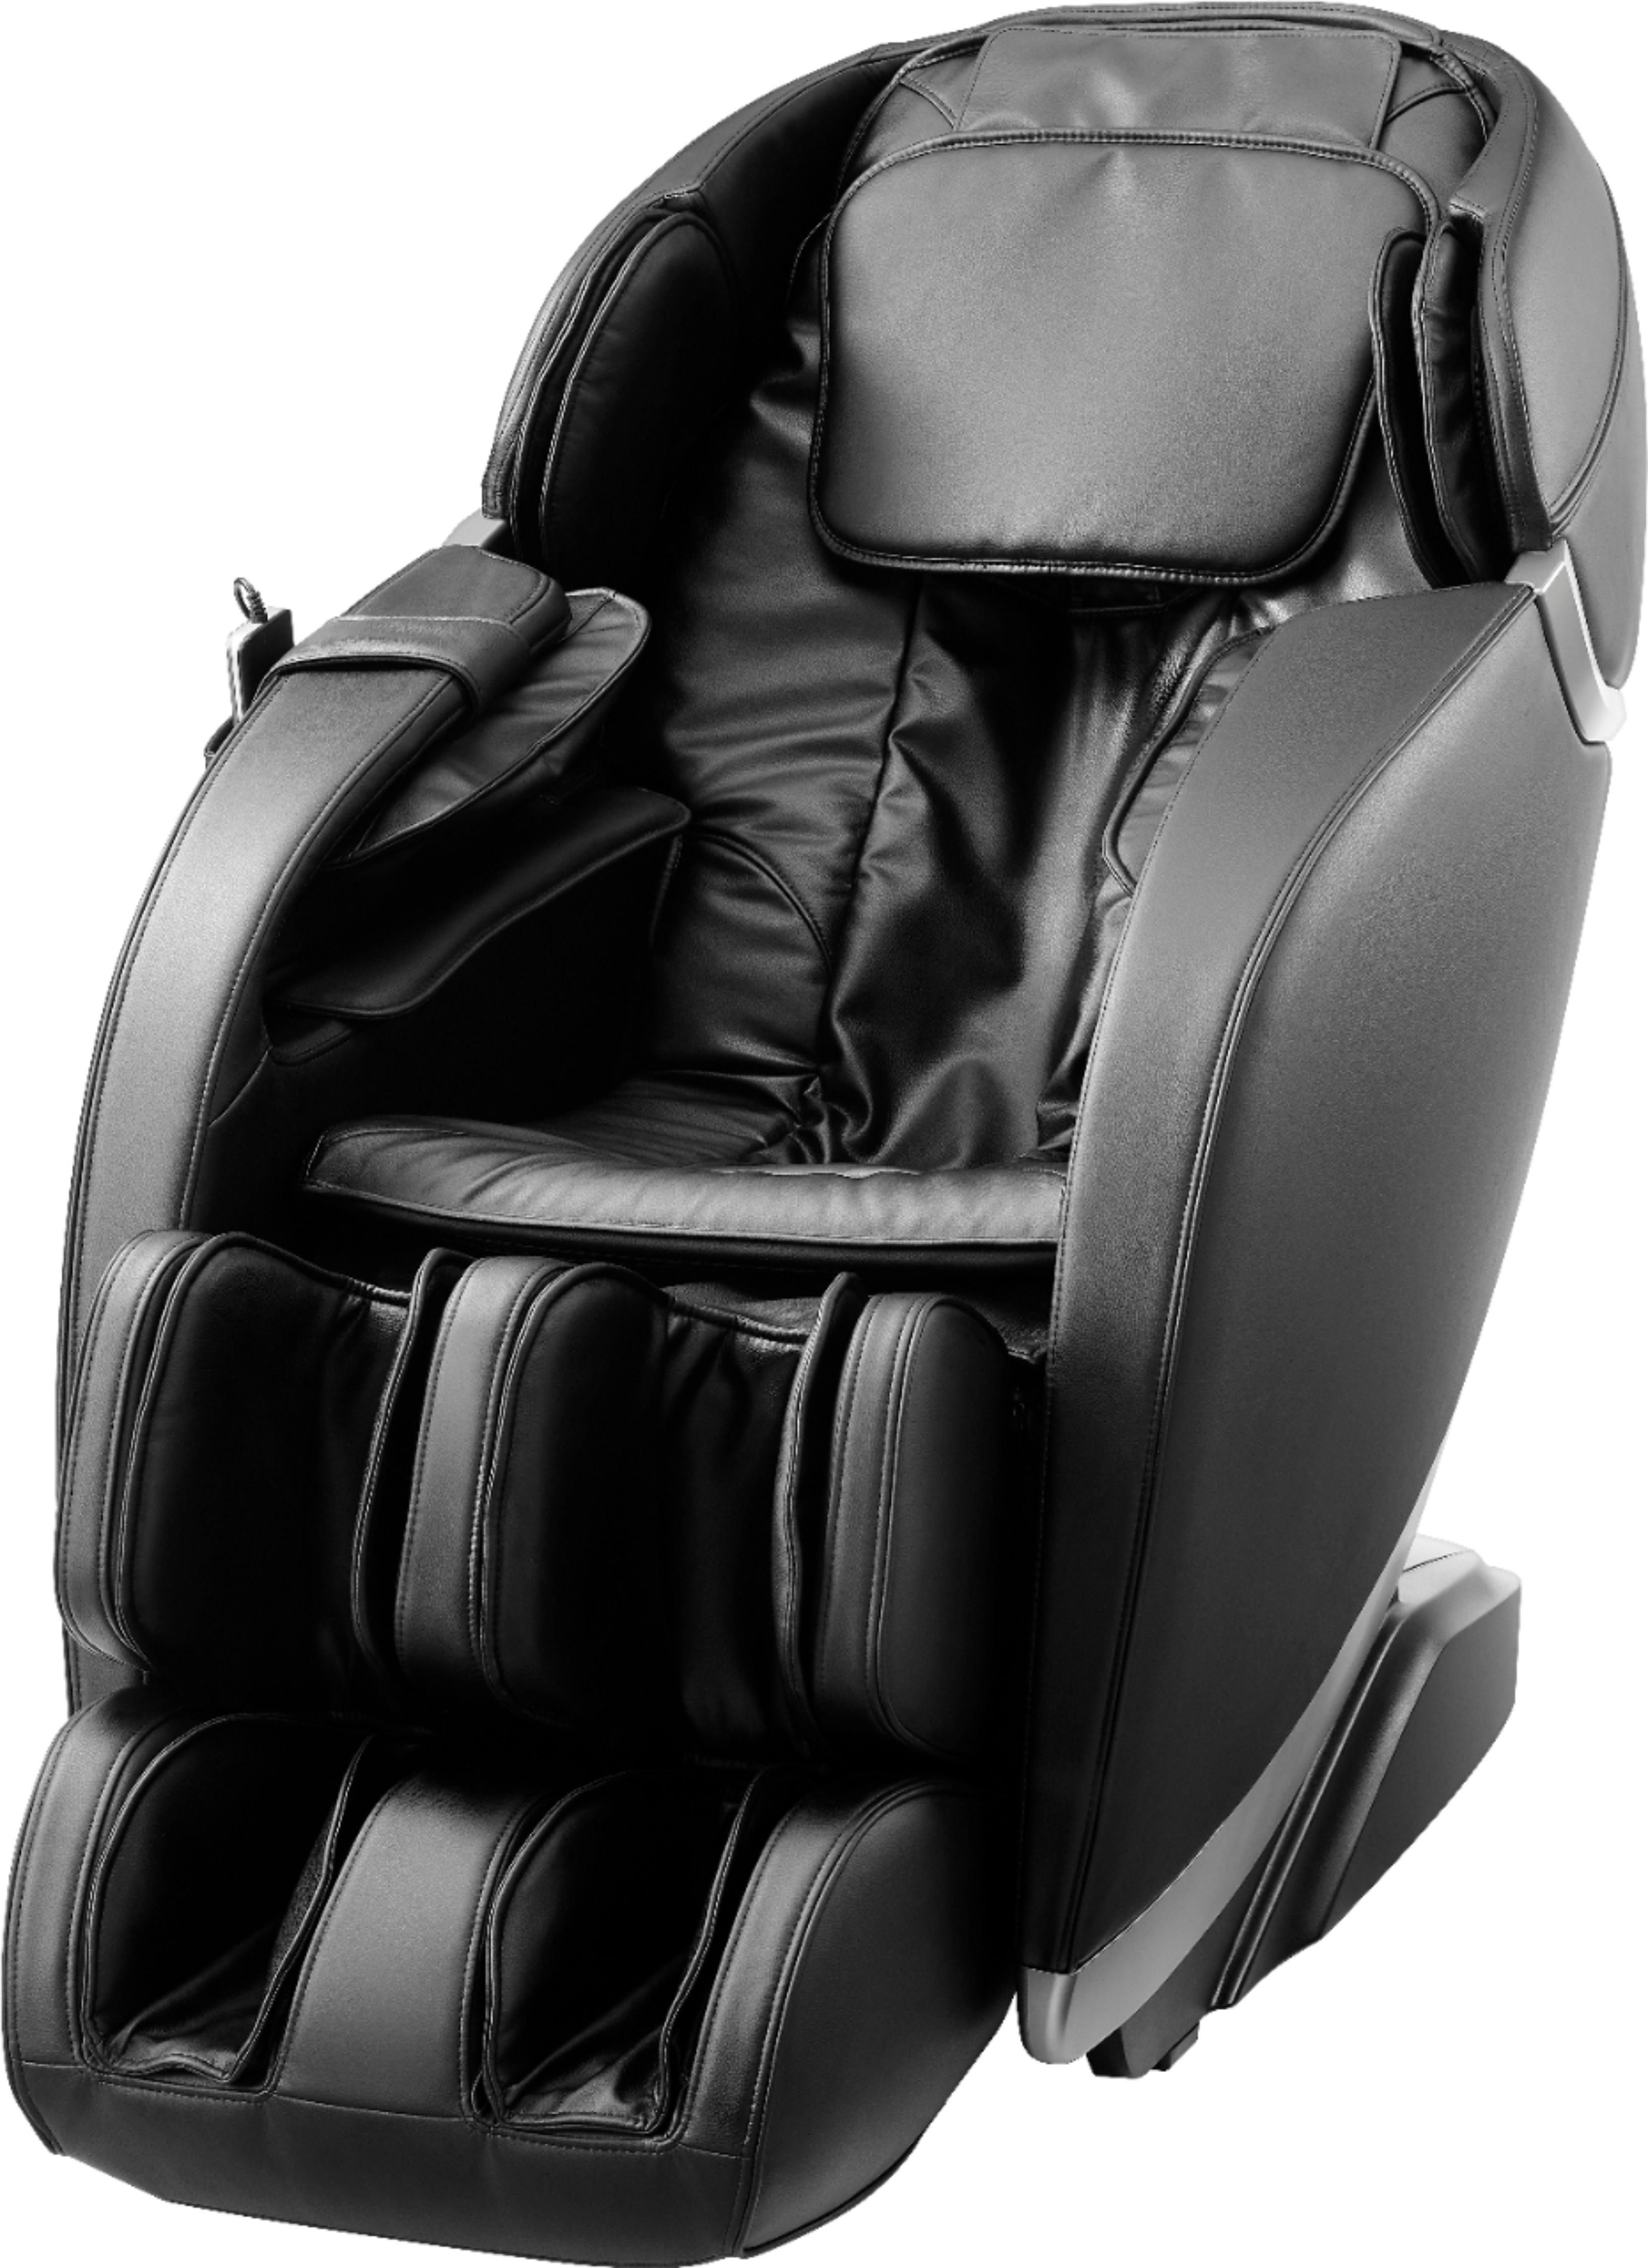 Insignia™ 2d Zero Gravity Full Body Massage Chair Black With Silver Trim Okinus Online Shop